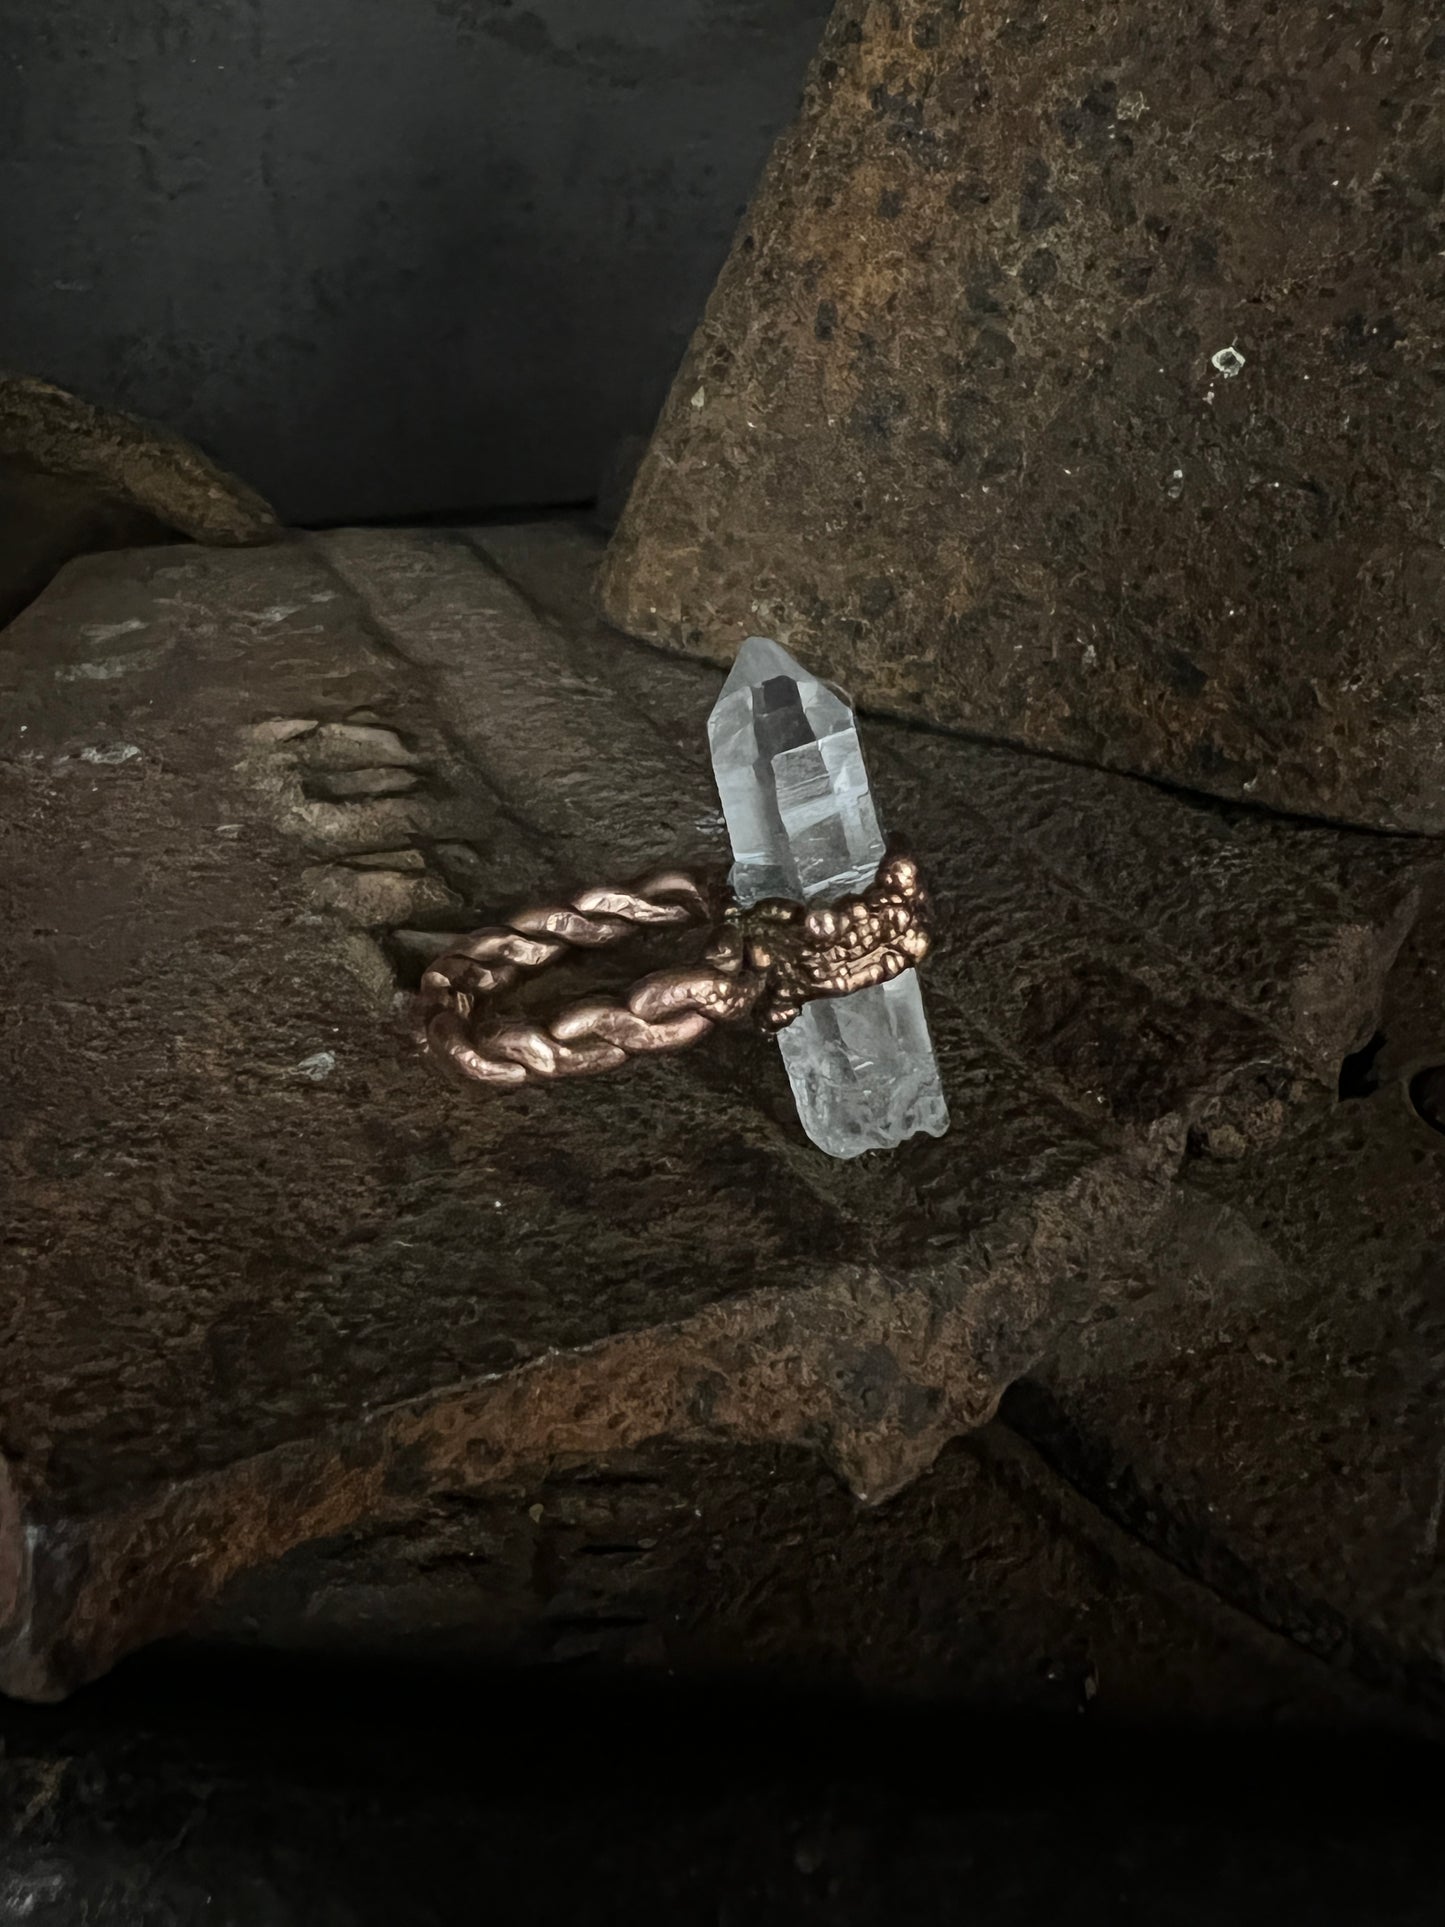 copper & clear quartz electroformed ring